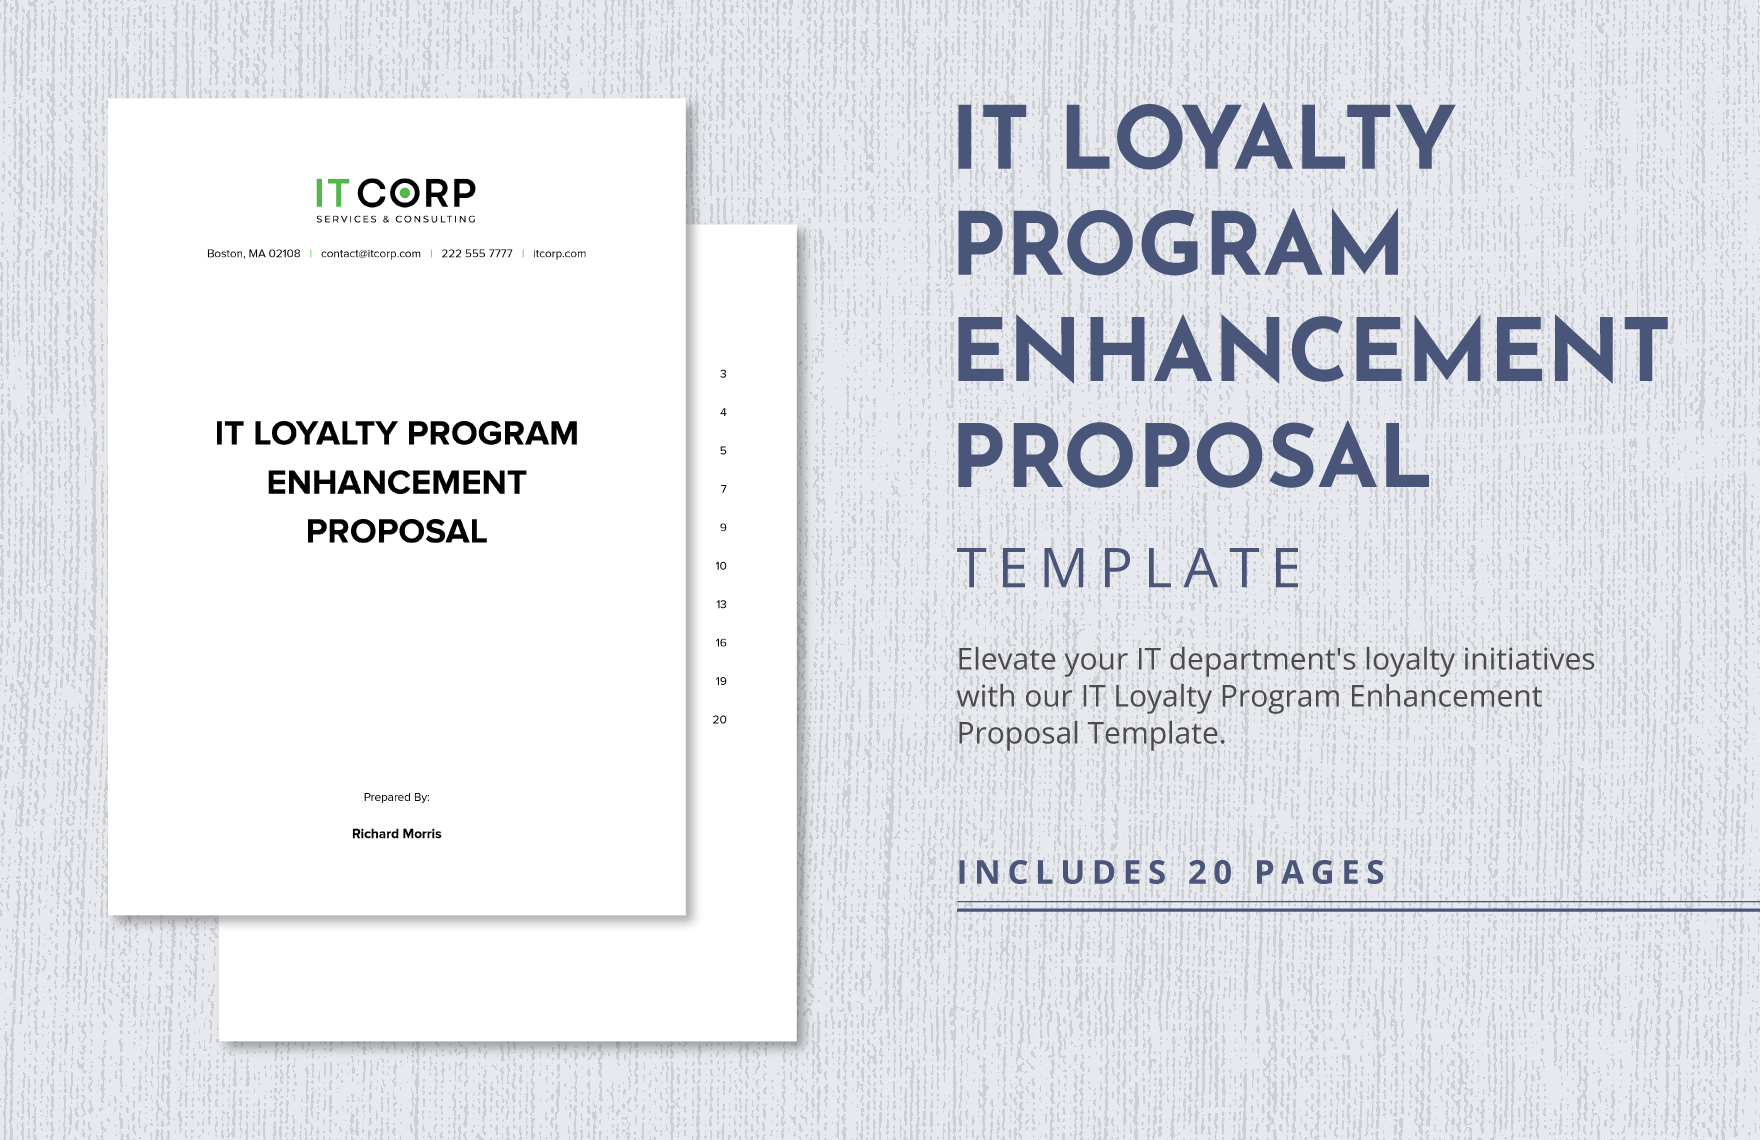 IT Loyalty Program Enhancement Proposal Template